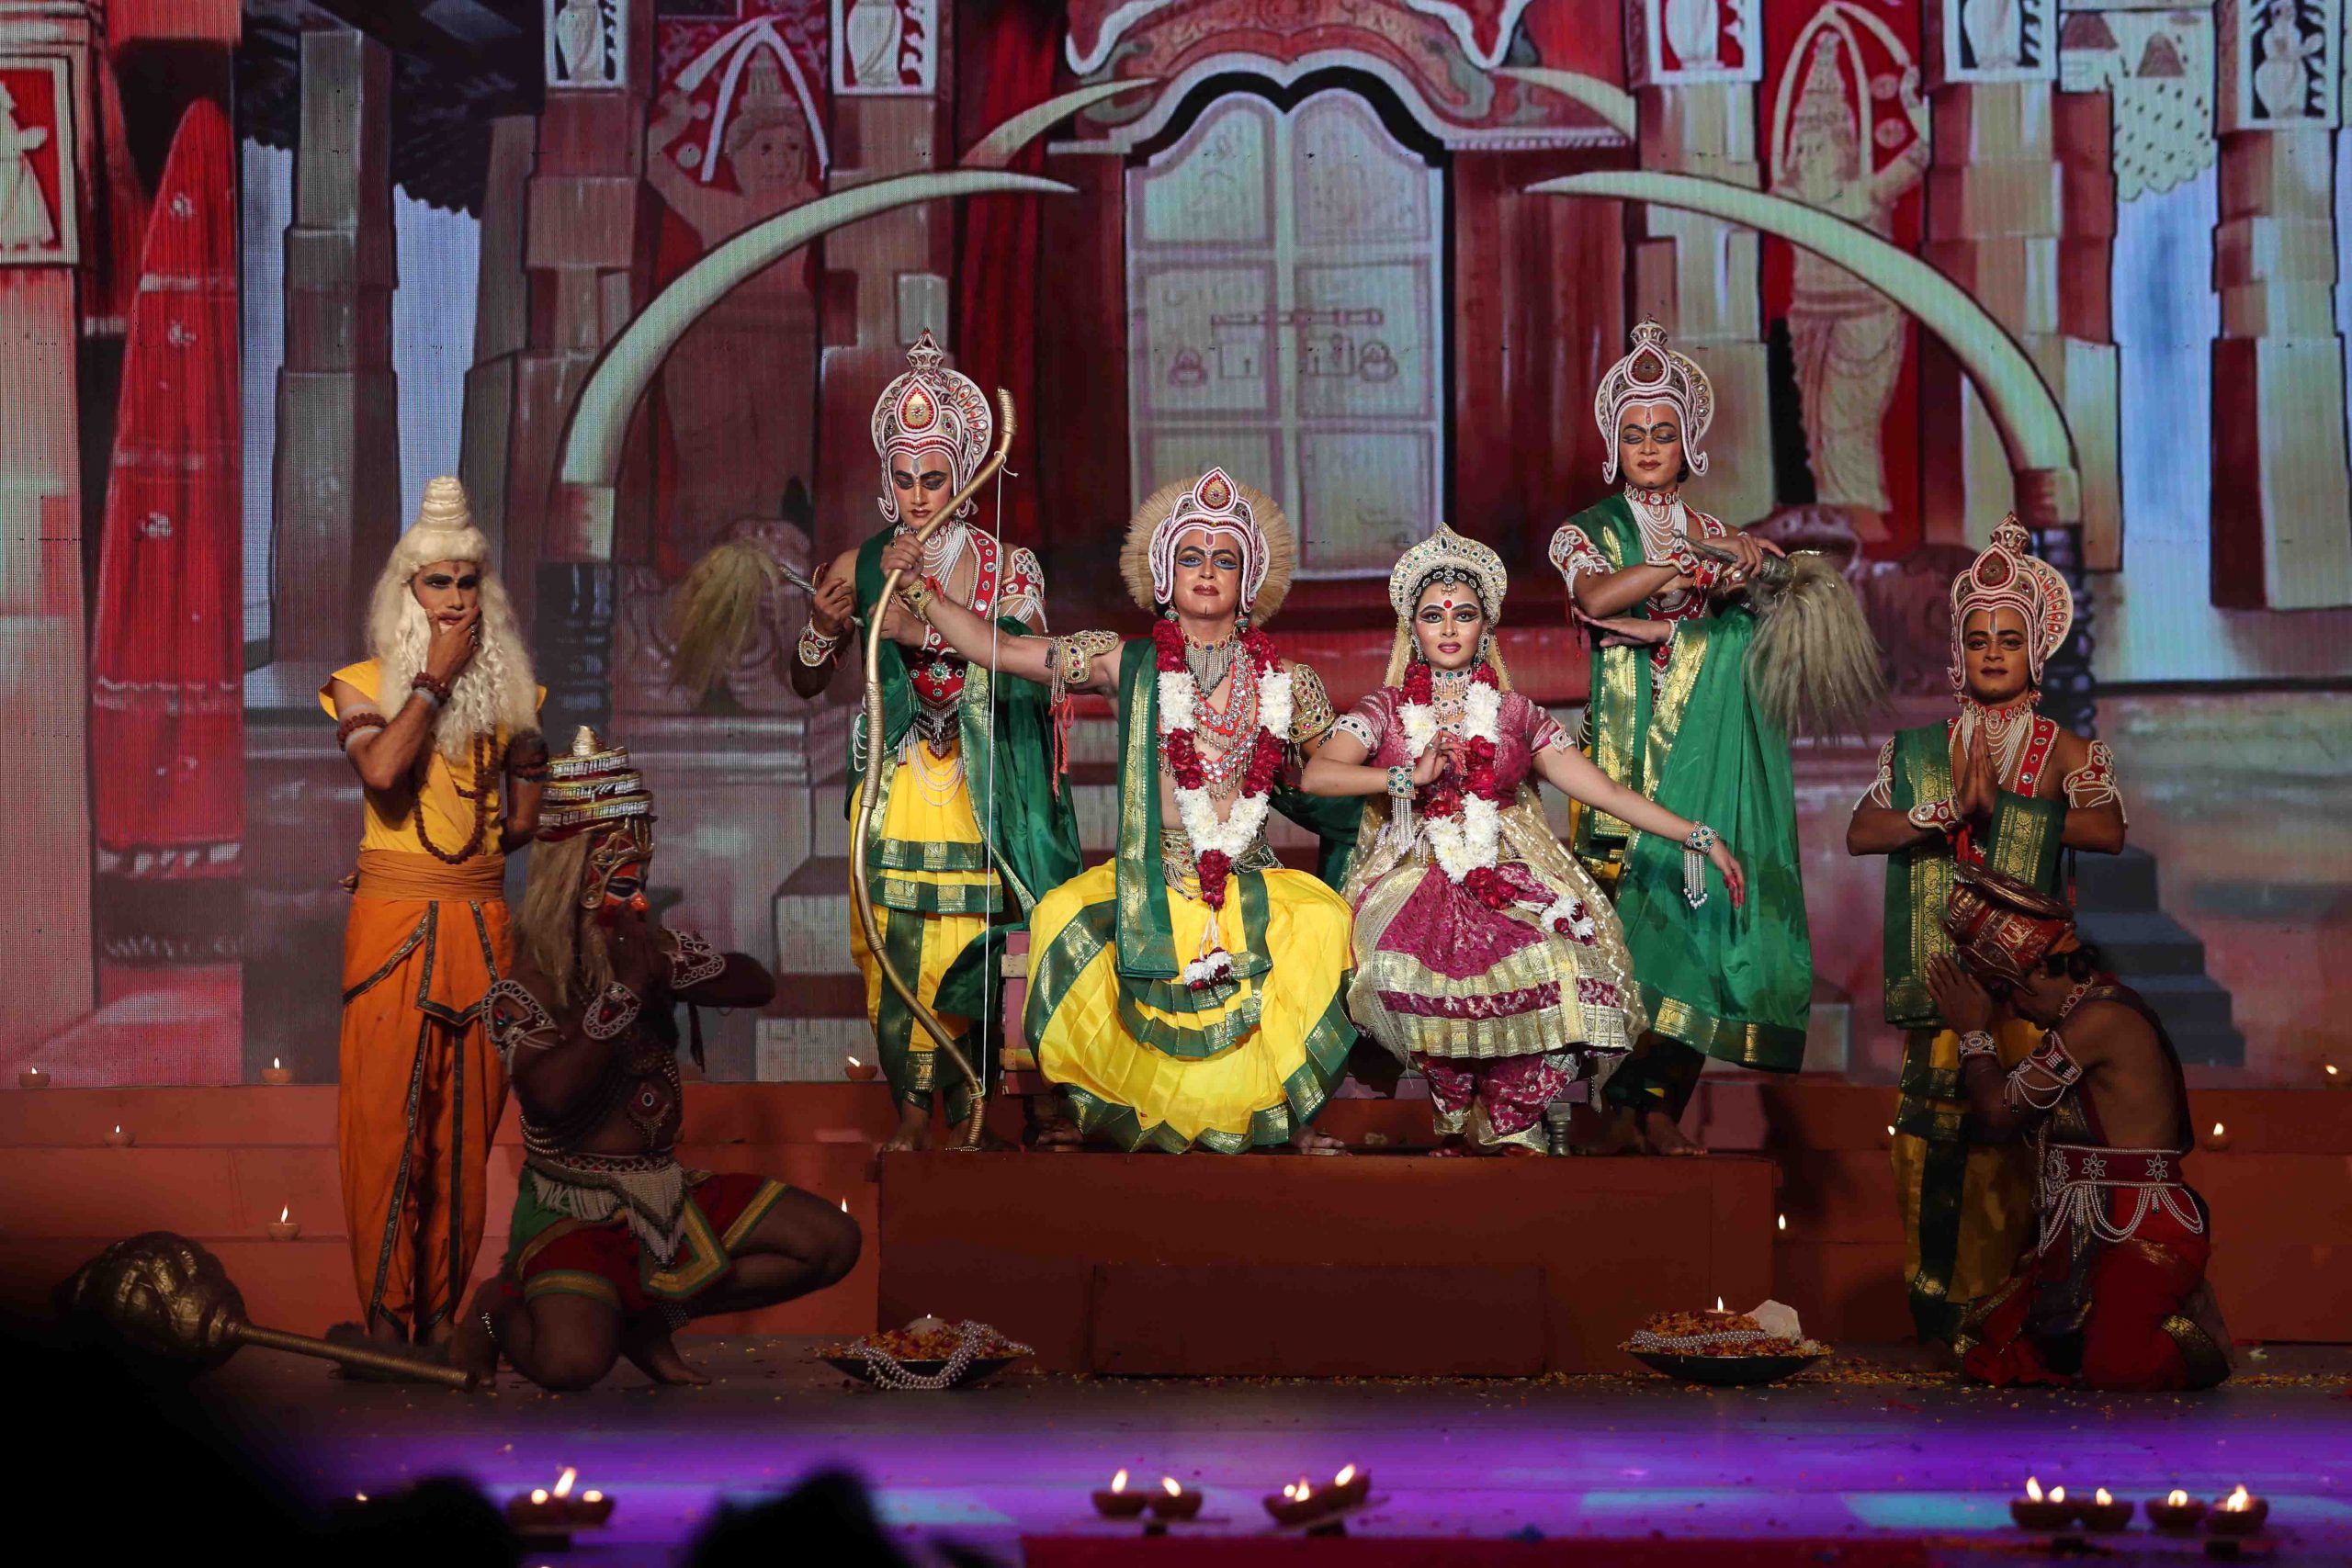 66th edition of 'Shri Ram' comes around to enhance flavor of festivities